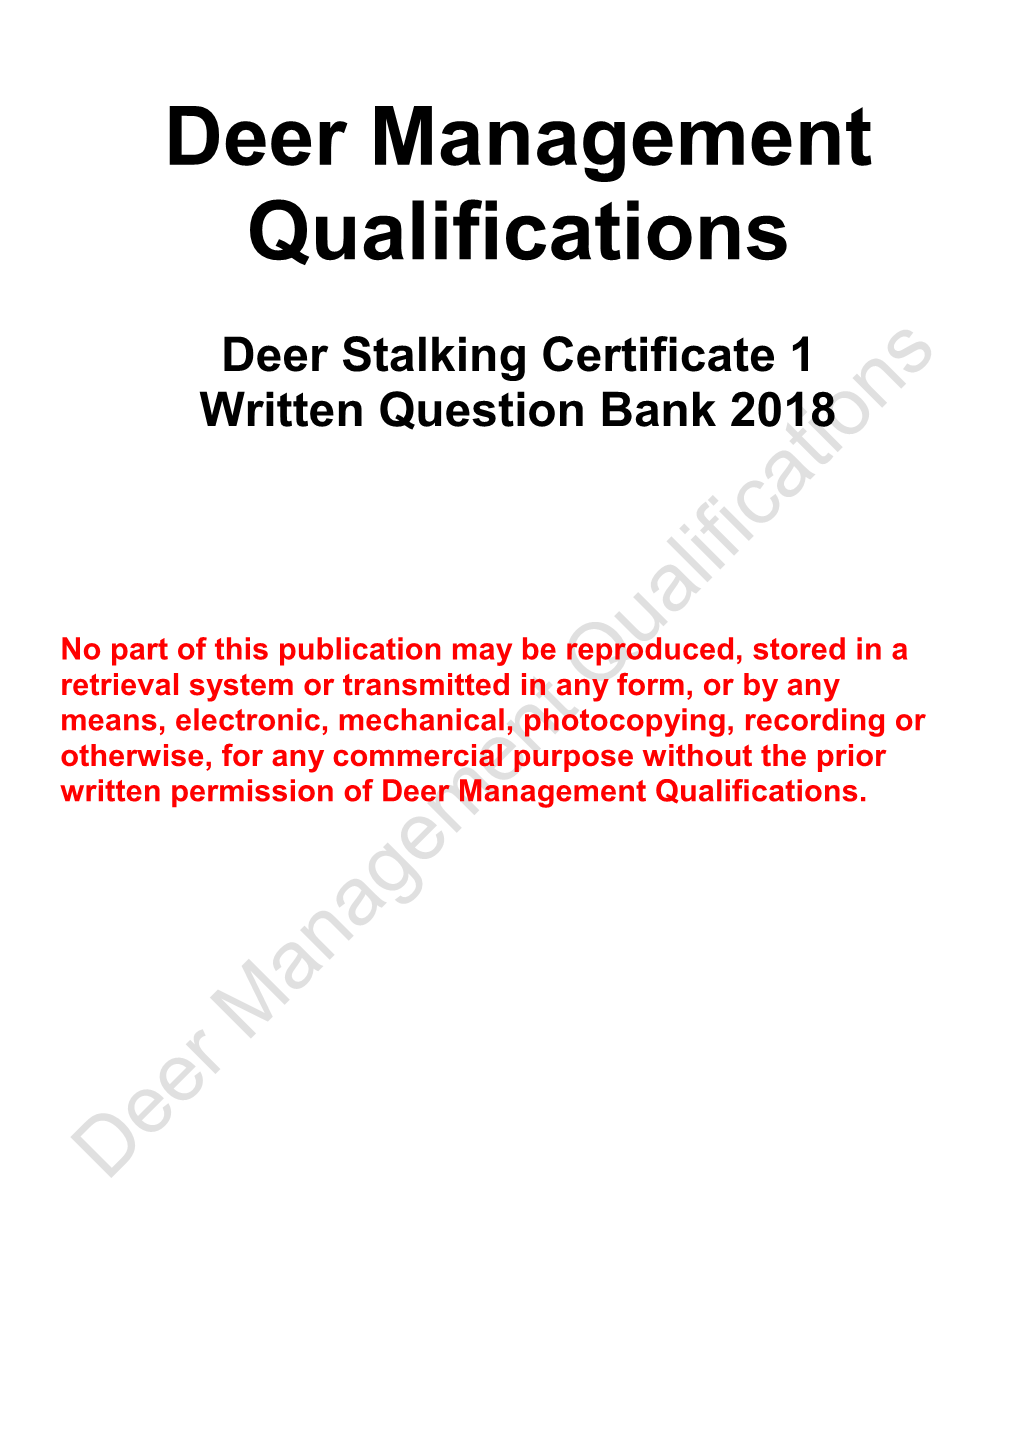 DSC1 Written Question Bank 2018